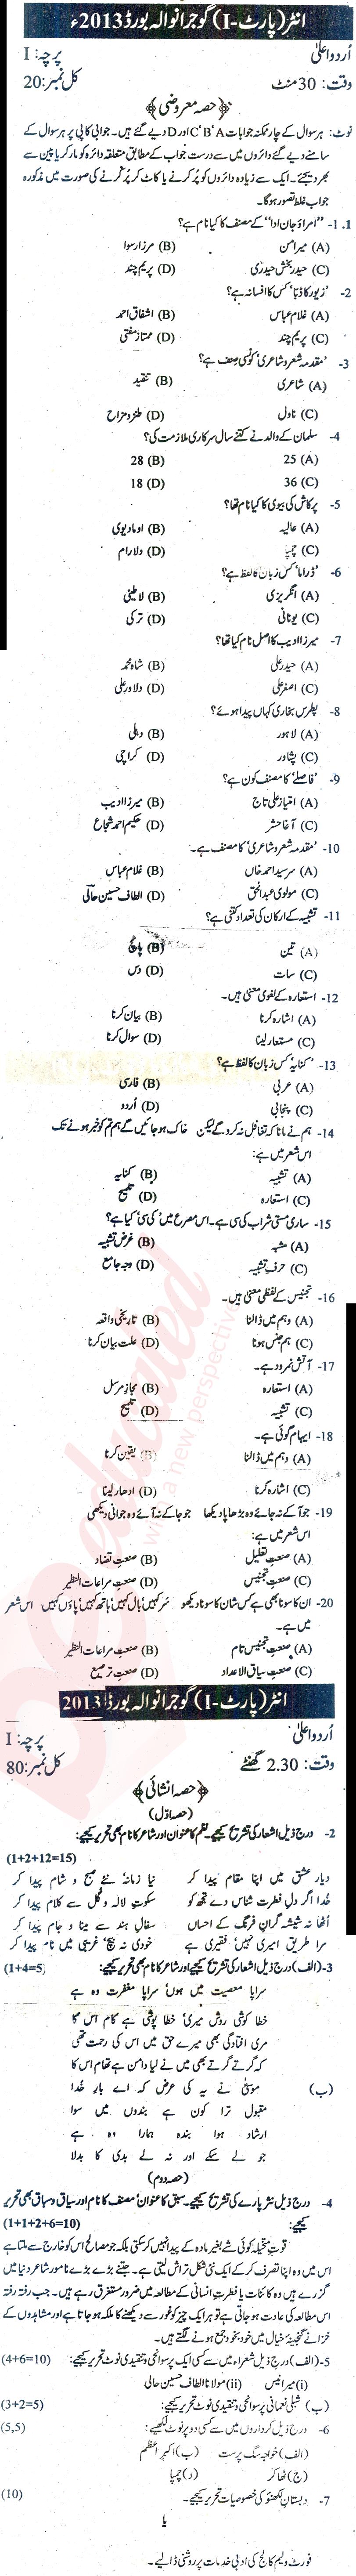 Urdu 11th class Past Paper Group 1 BISE Gujranwala 2013